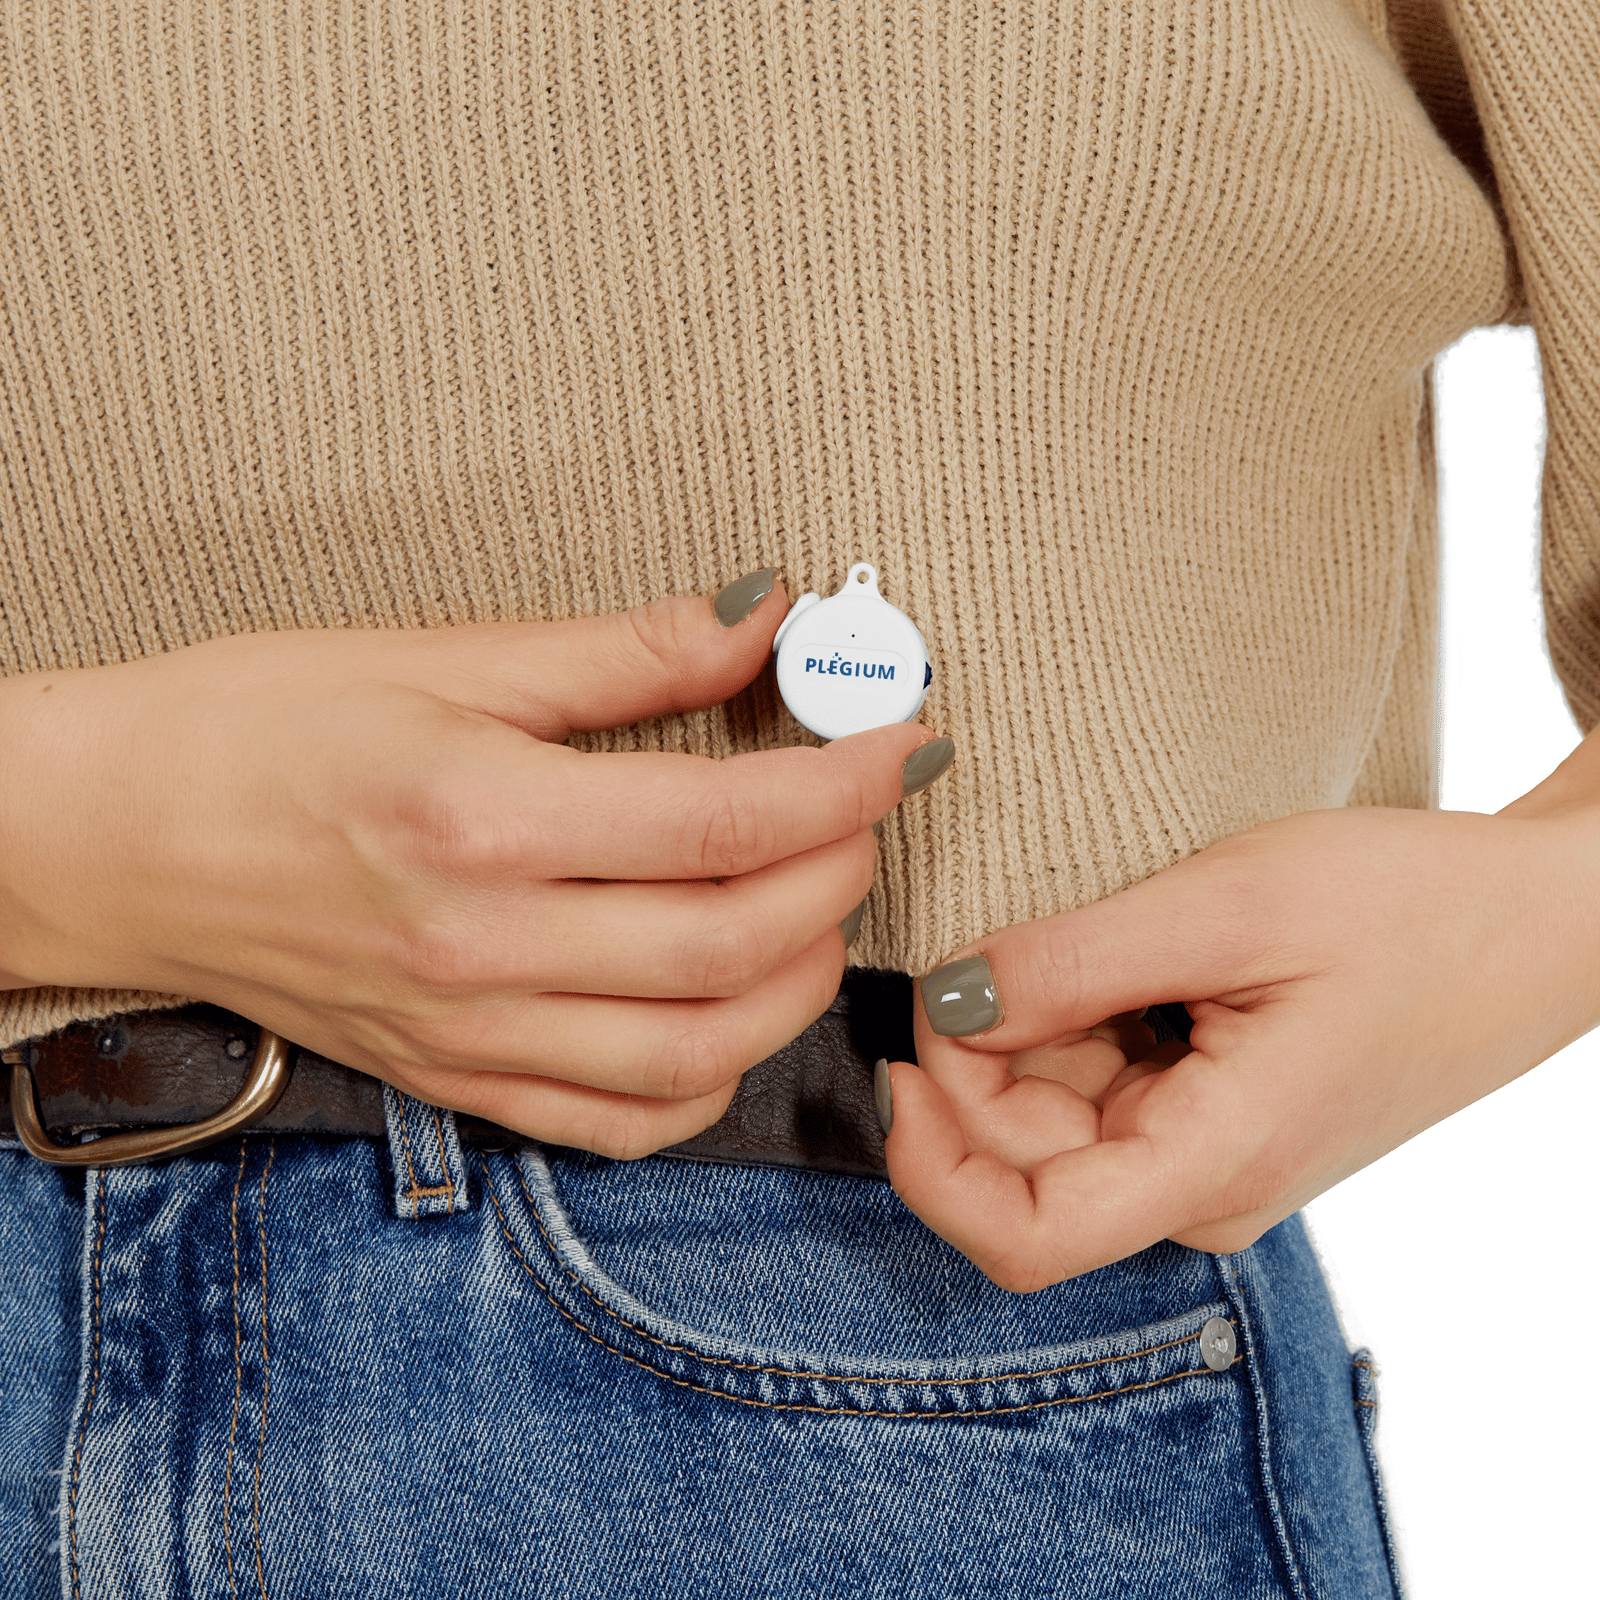 Plegium Smart Emergency Button Wearable 1 st